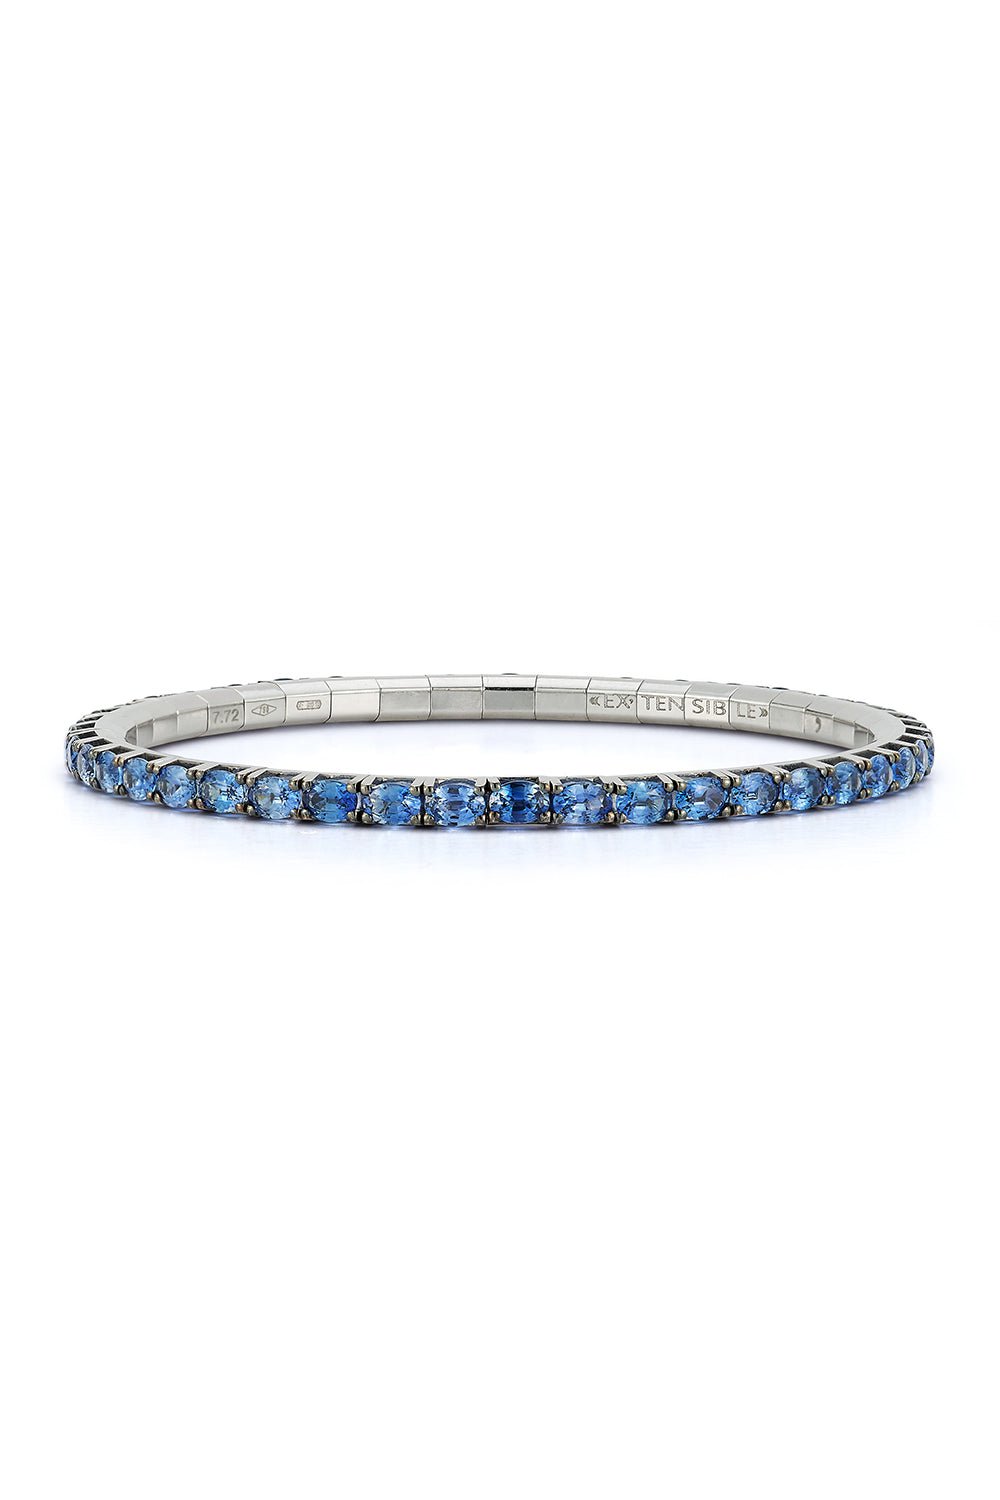 ROBERTO DEMEGLIO-Extensible Oval Blue Sapphire Stretch Tennis Bracelet-WHITE GOLD